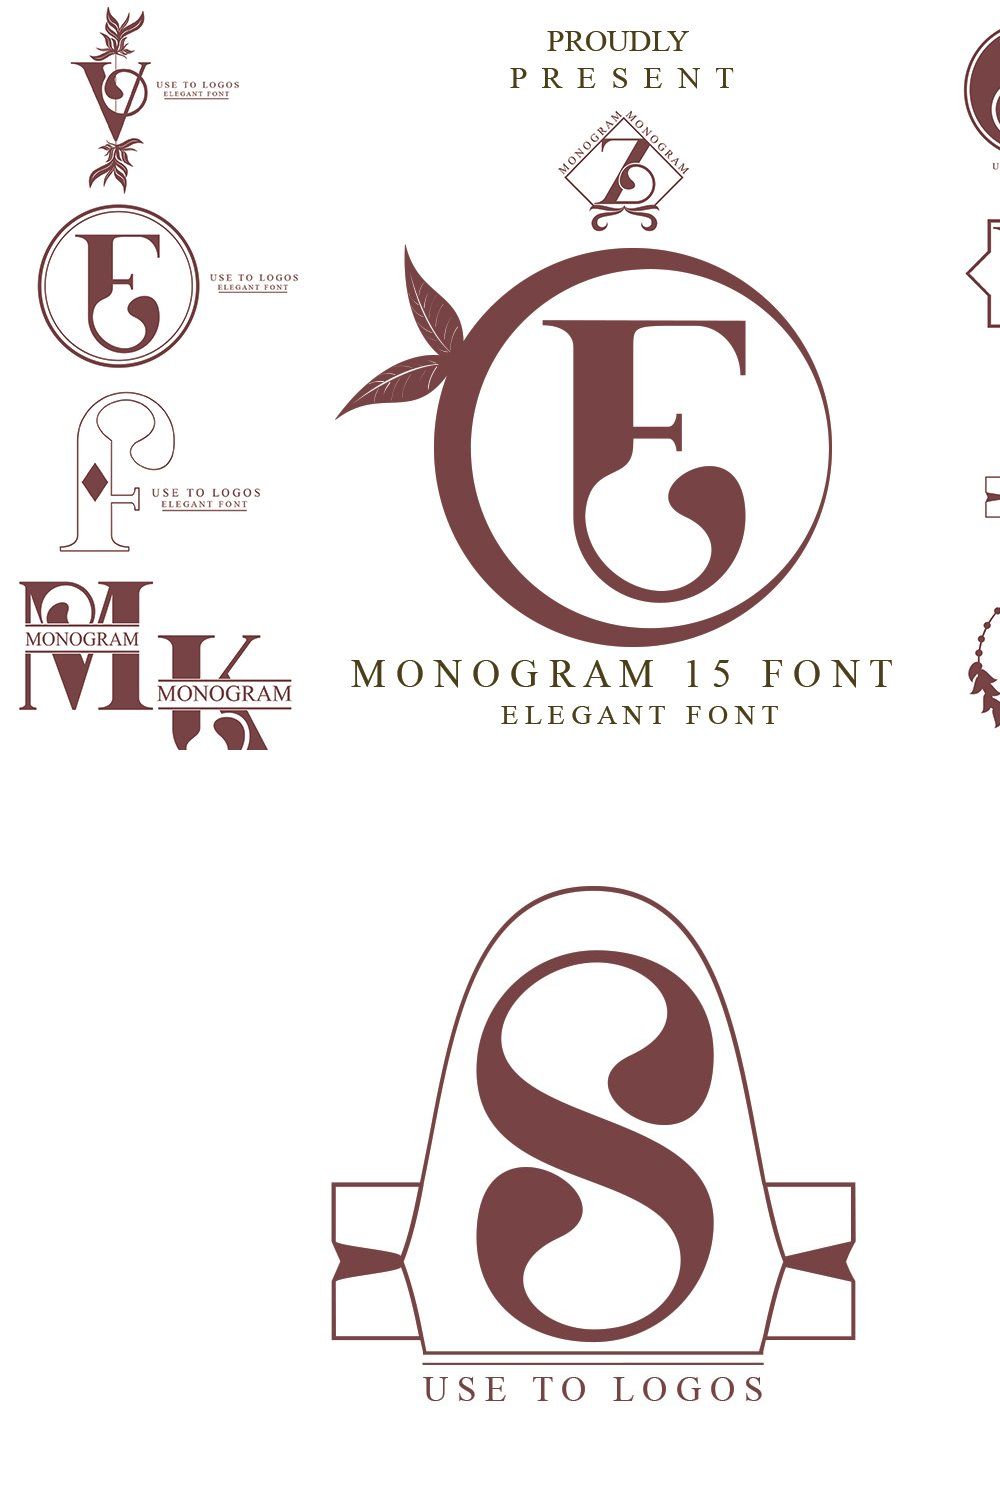 Monogram pinterest preview image.